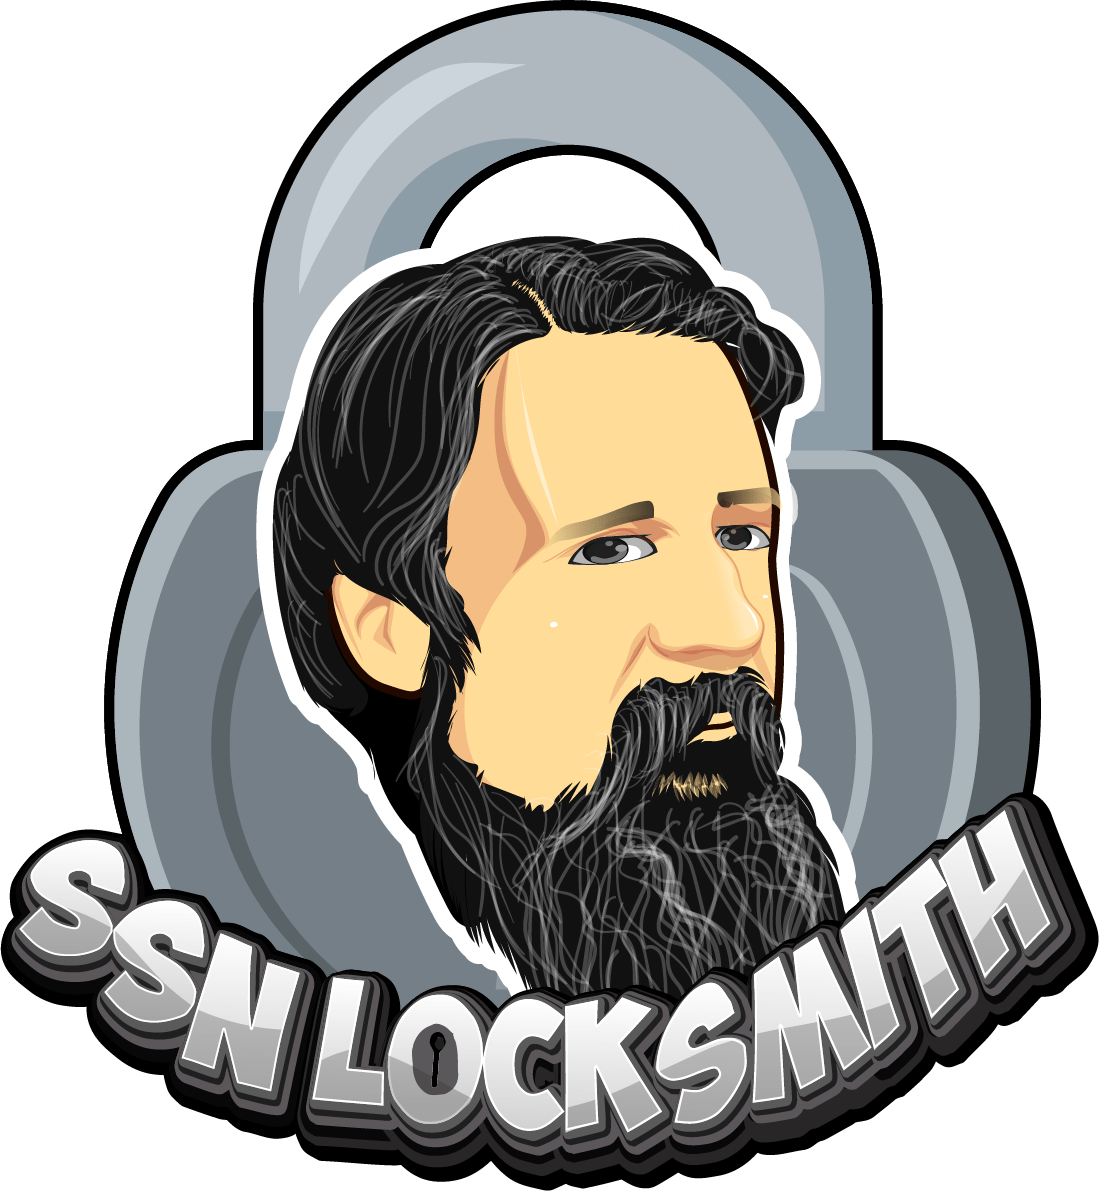 SSN Locksmith